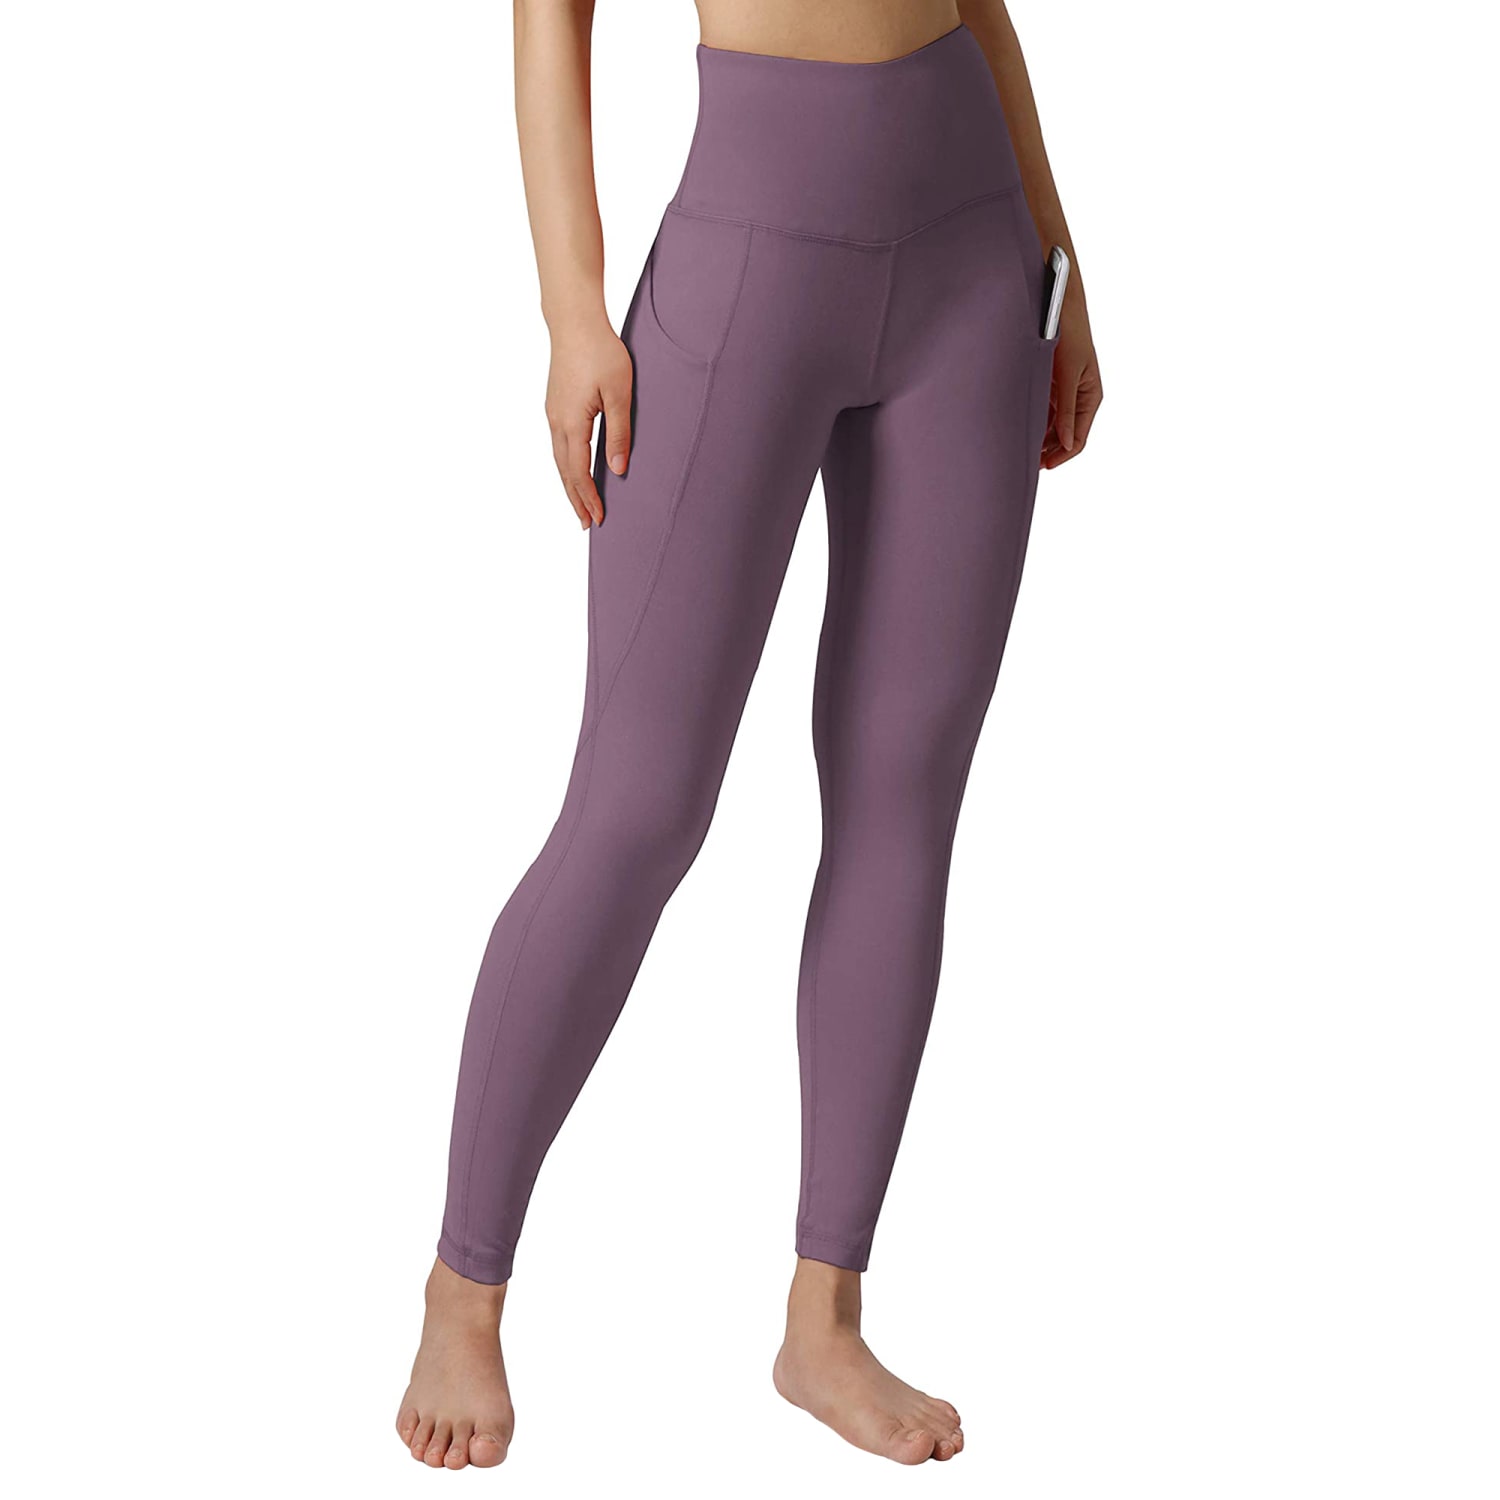 Ododos High Waist Yoga Athletic Pants M Medium Purple Side POCKETS